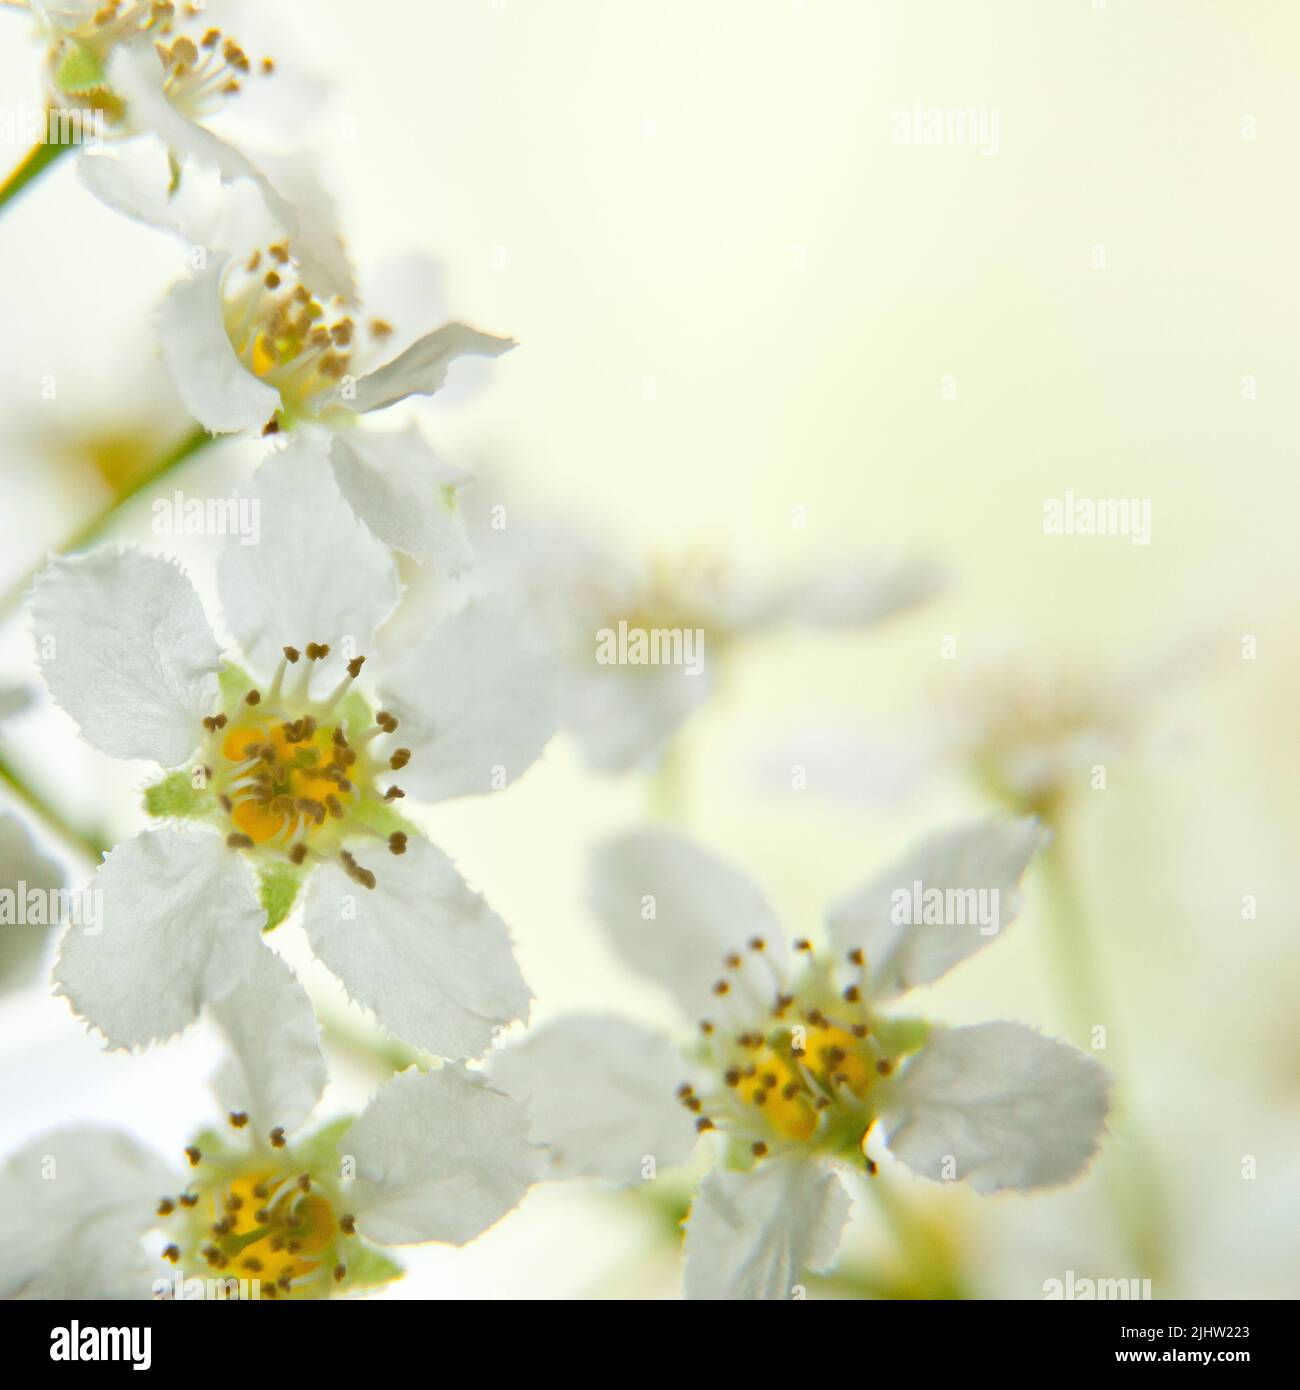 flowering bird cherry tree branch. bird cherry flowers macro. Spring background with white flowers Stock Photo